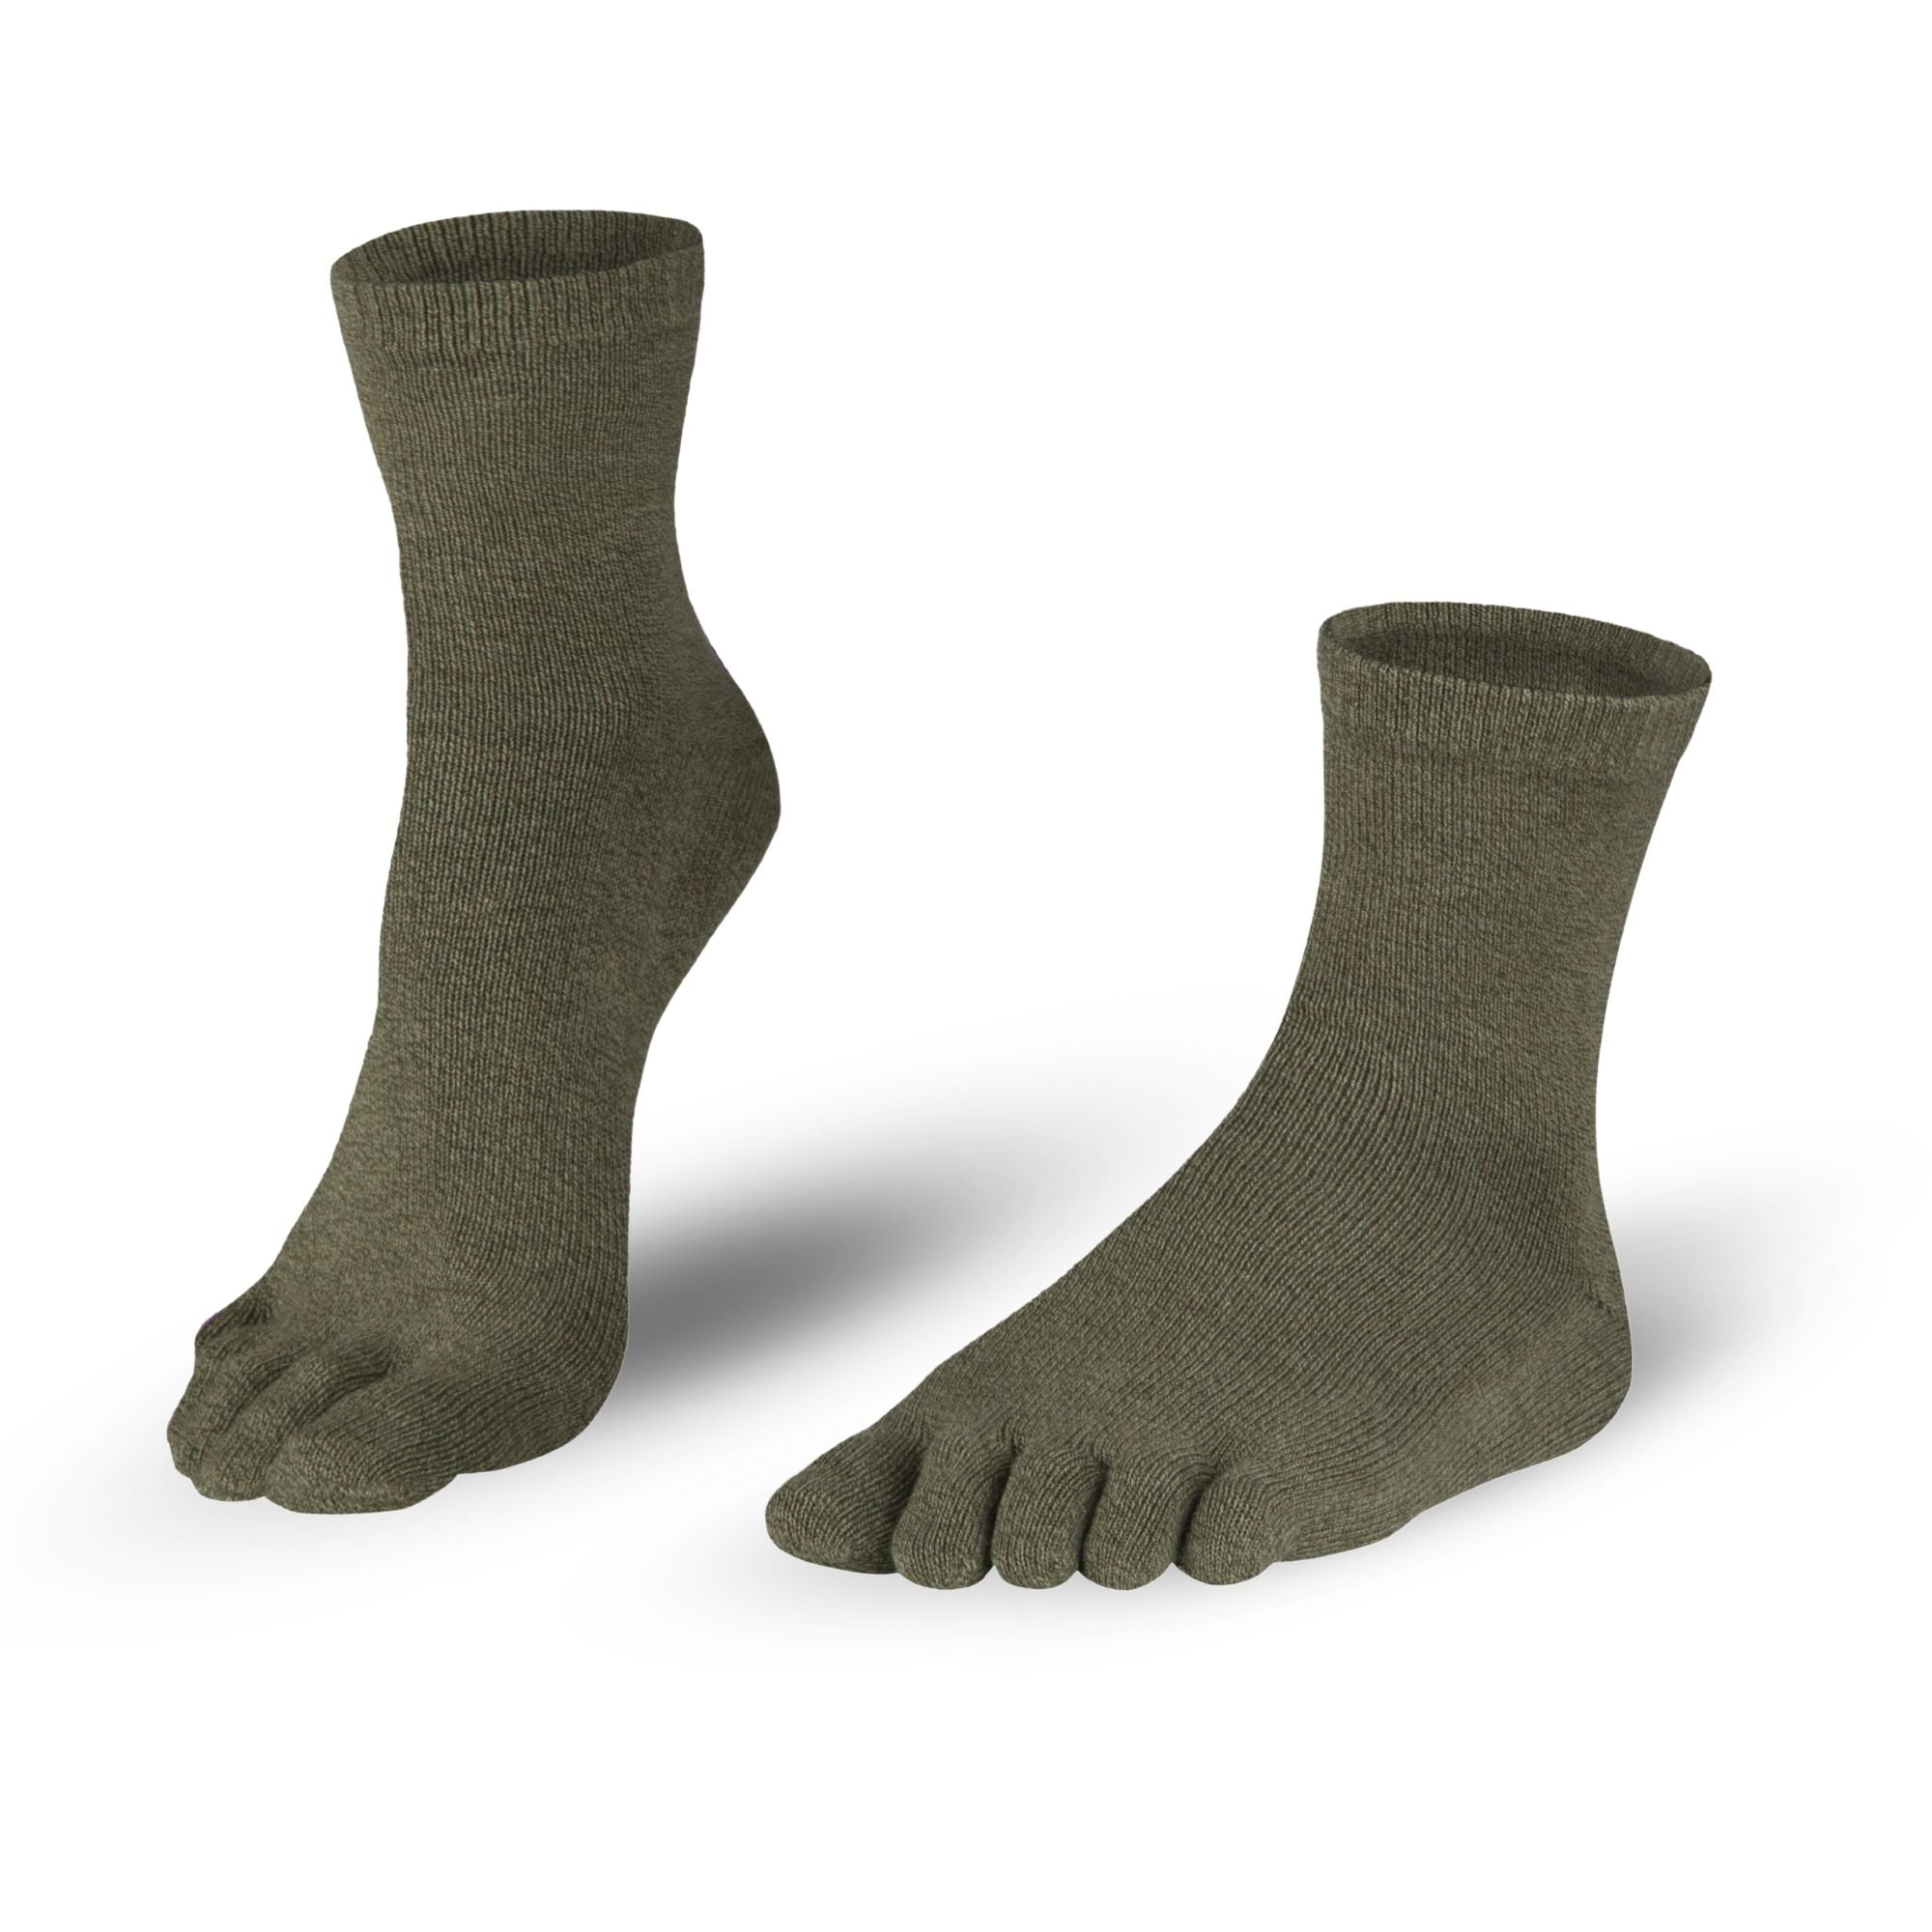 Cotton toe socks socks in grey-green for ladies and gentlemen